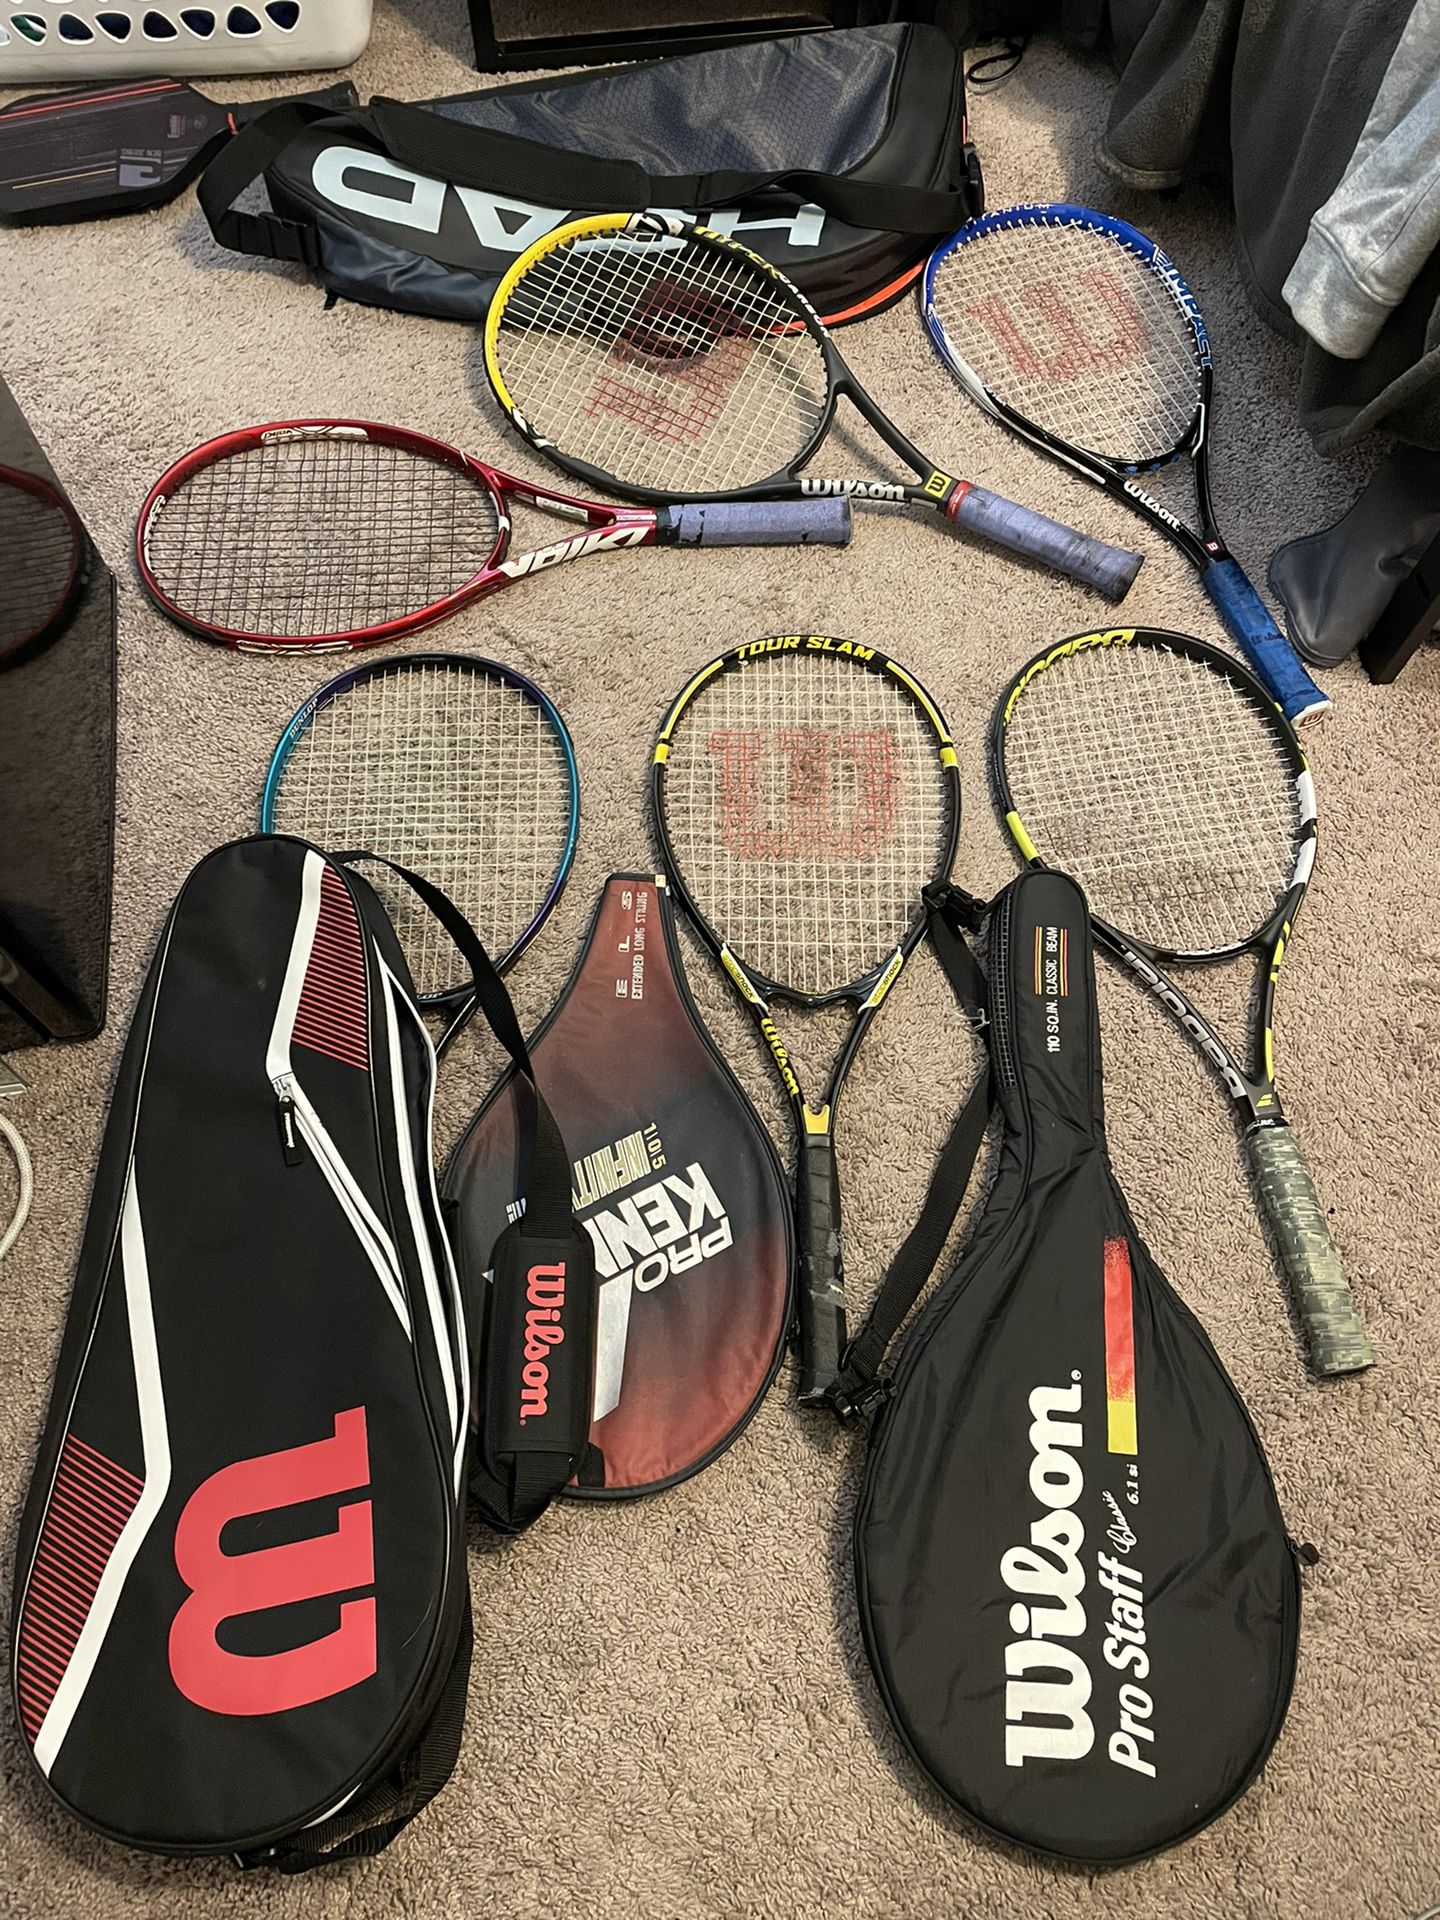 Tennis Rackets/bags